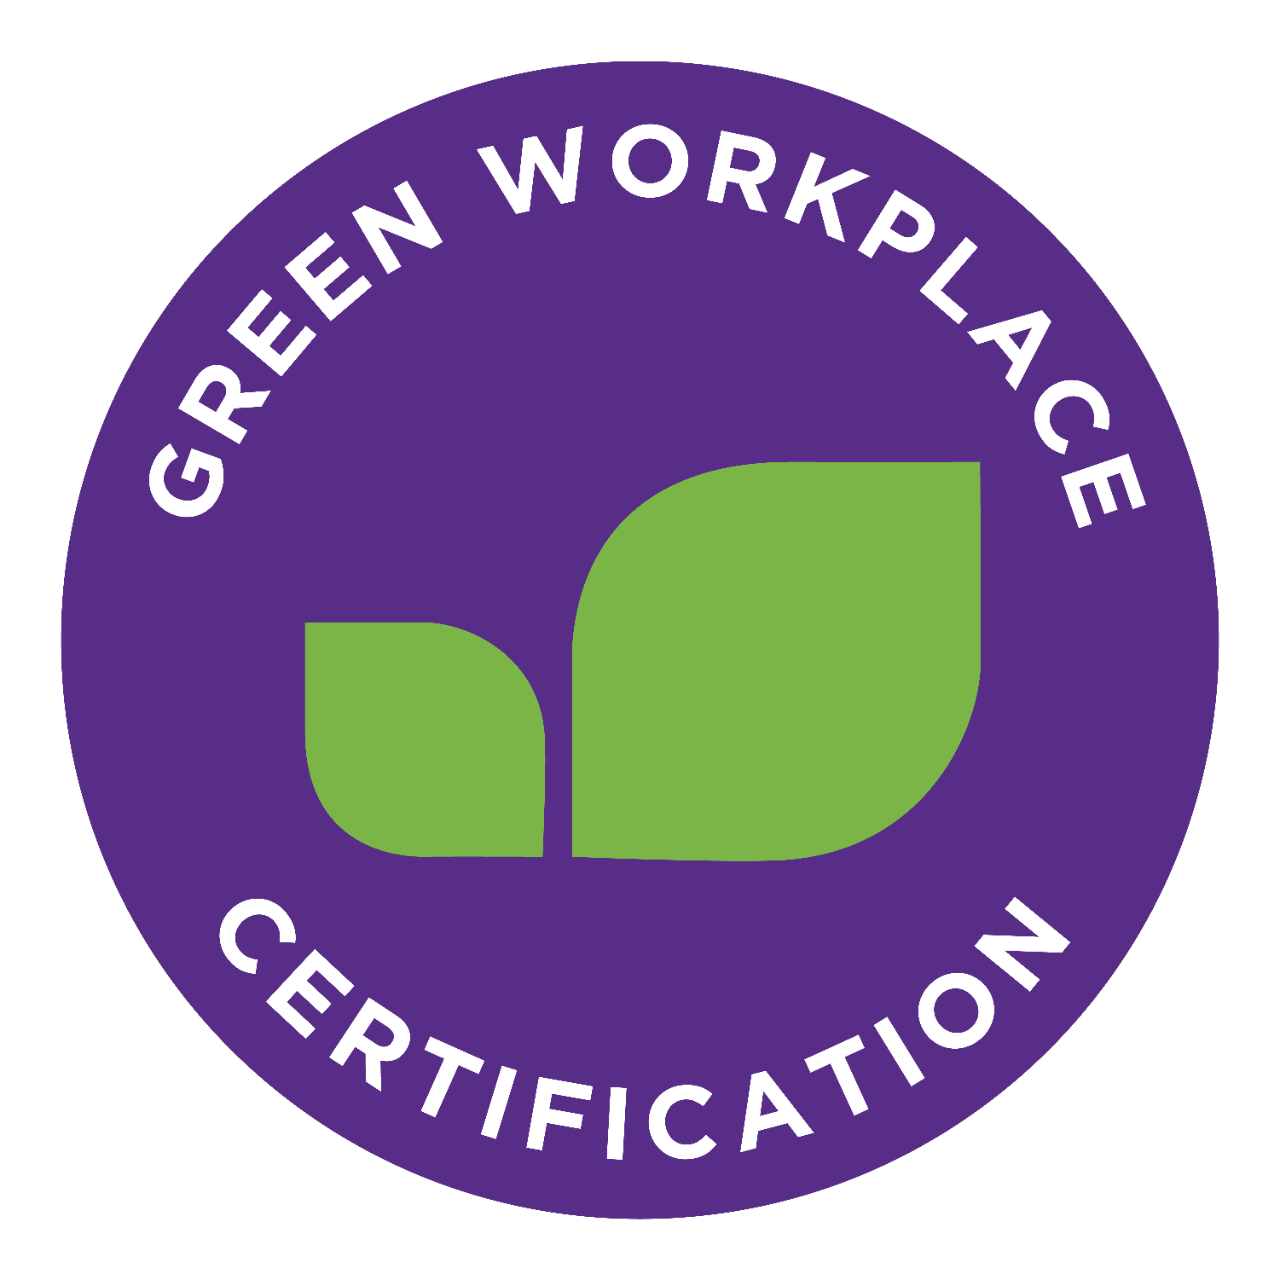 Green Workplace Certification logo